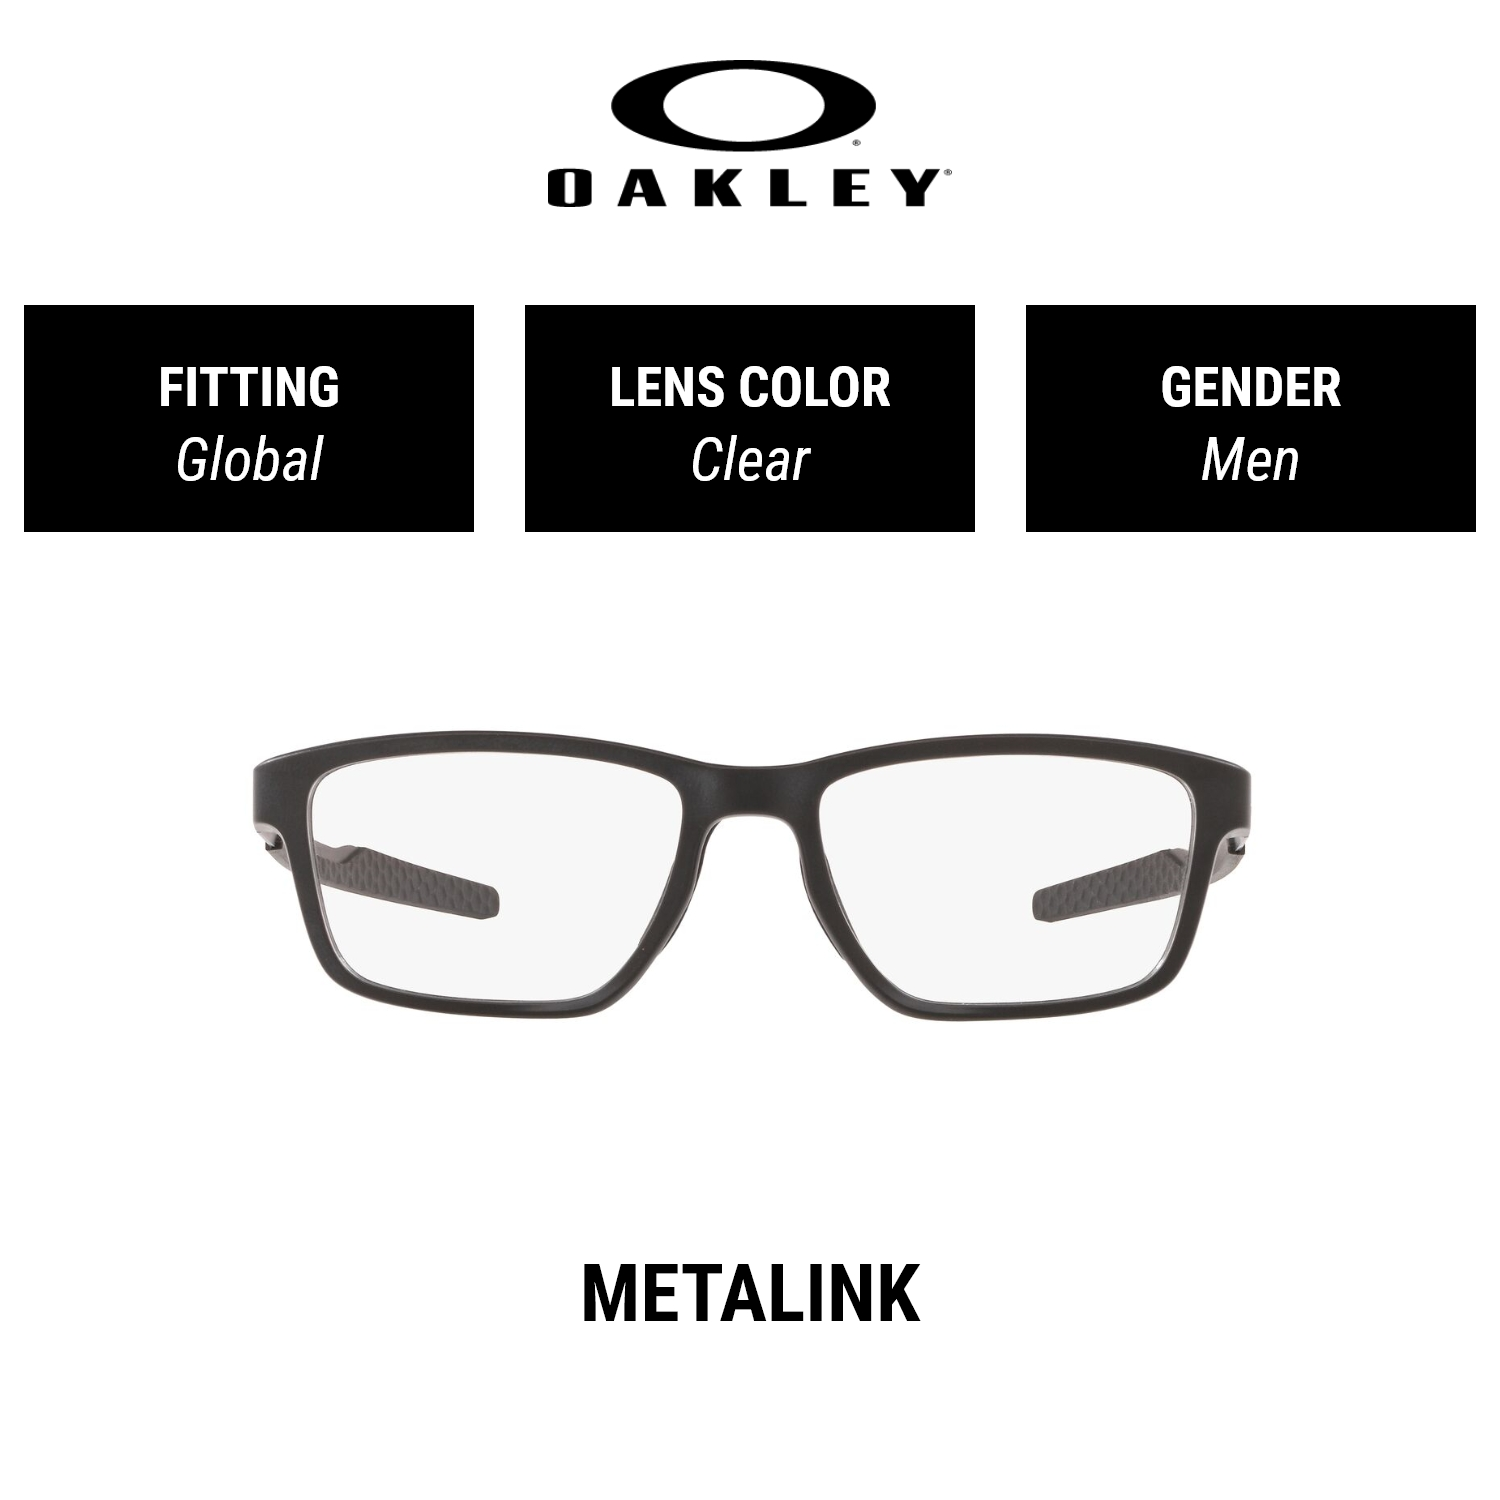 OAKLEY Metalink OX8153 815301 Men Global Fitting Eyeglasses Size 55mm |  Lazada Singapore